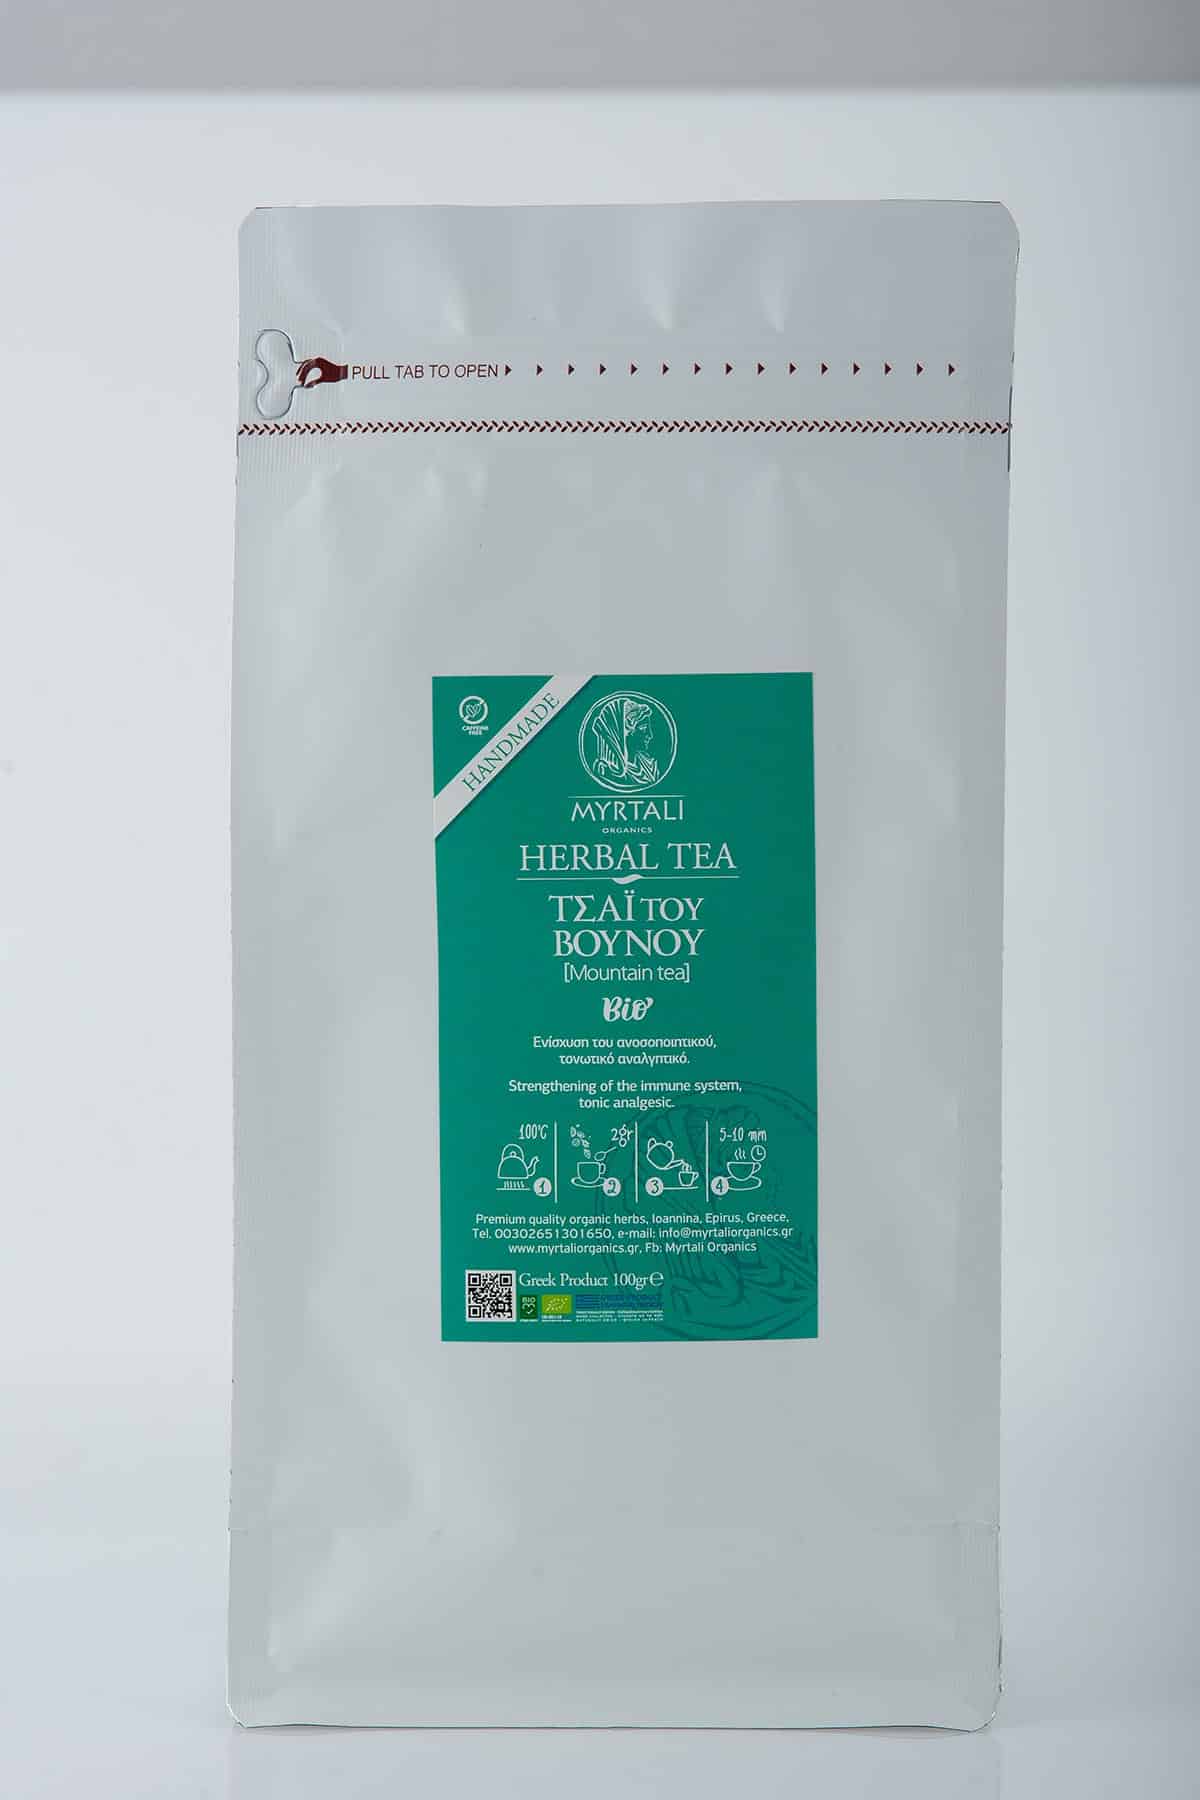 Myrtali Organics - Τσάι Του Βουνού